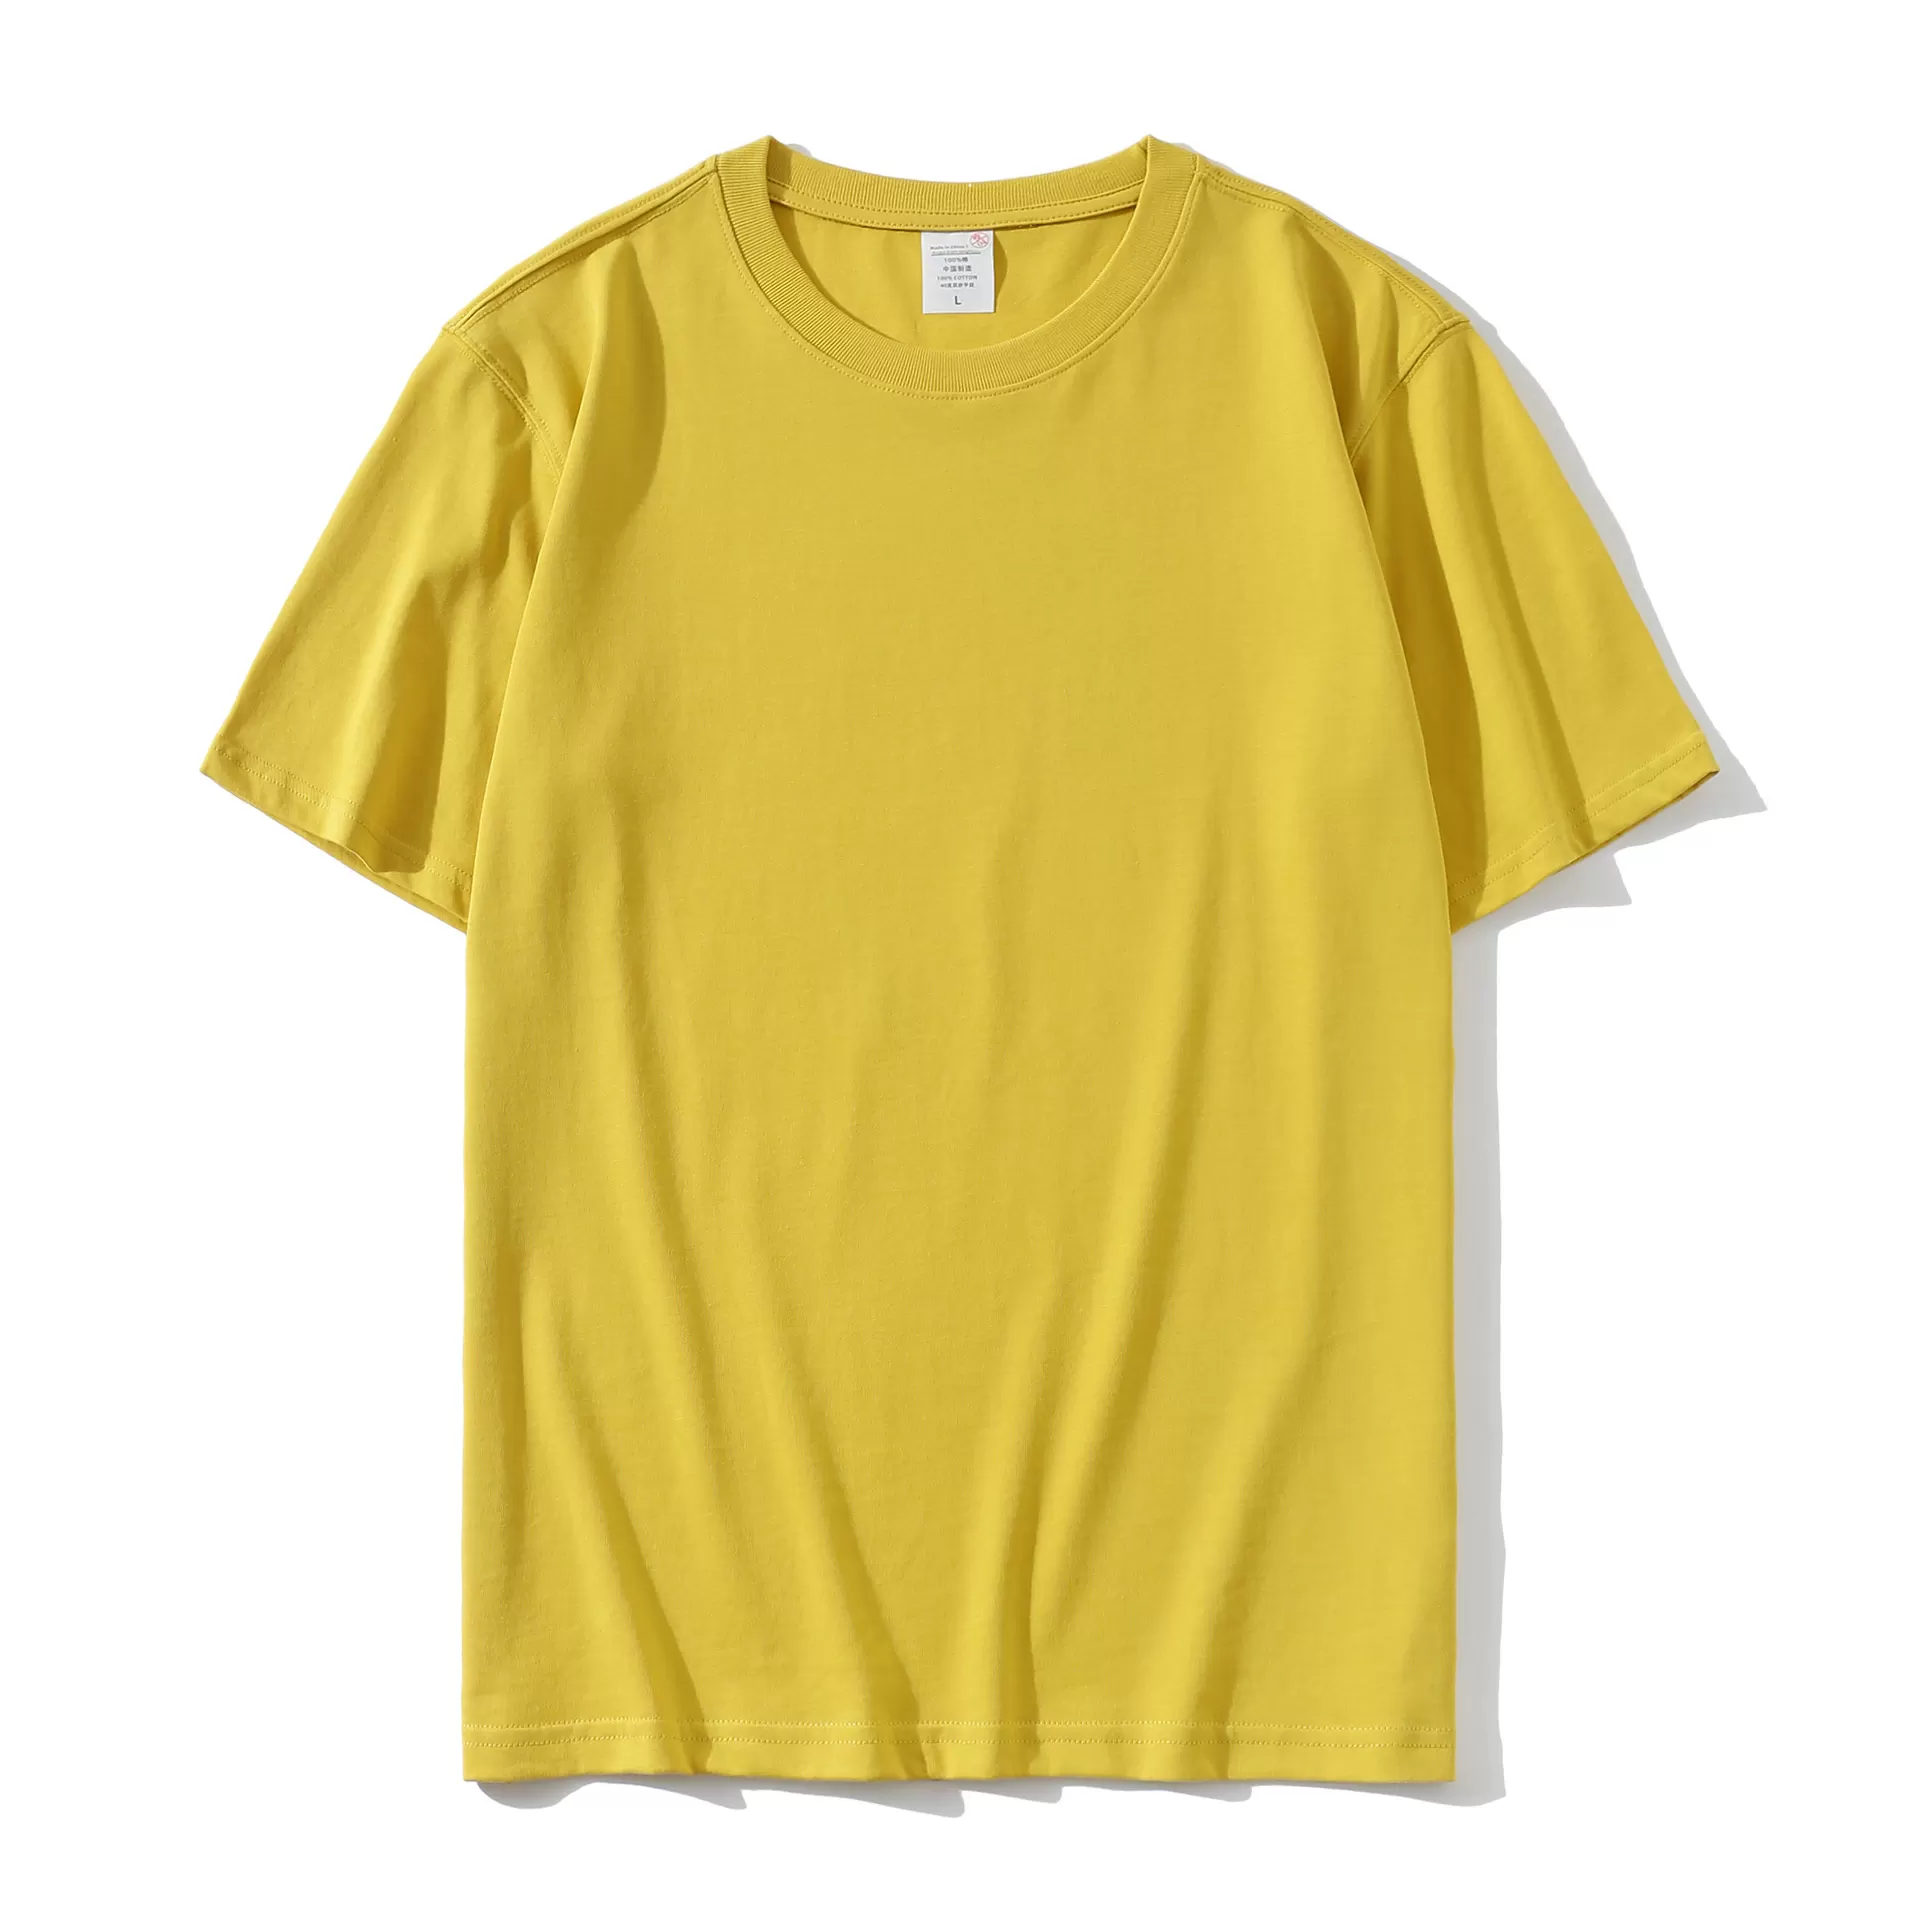 Yellow - blank t-shirts Manufacturer Exporter Bangladesh Wholesale Supplier Factory